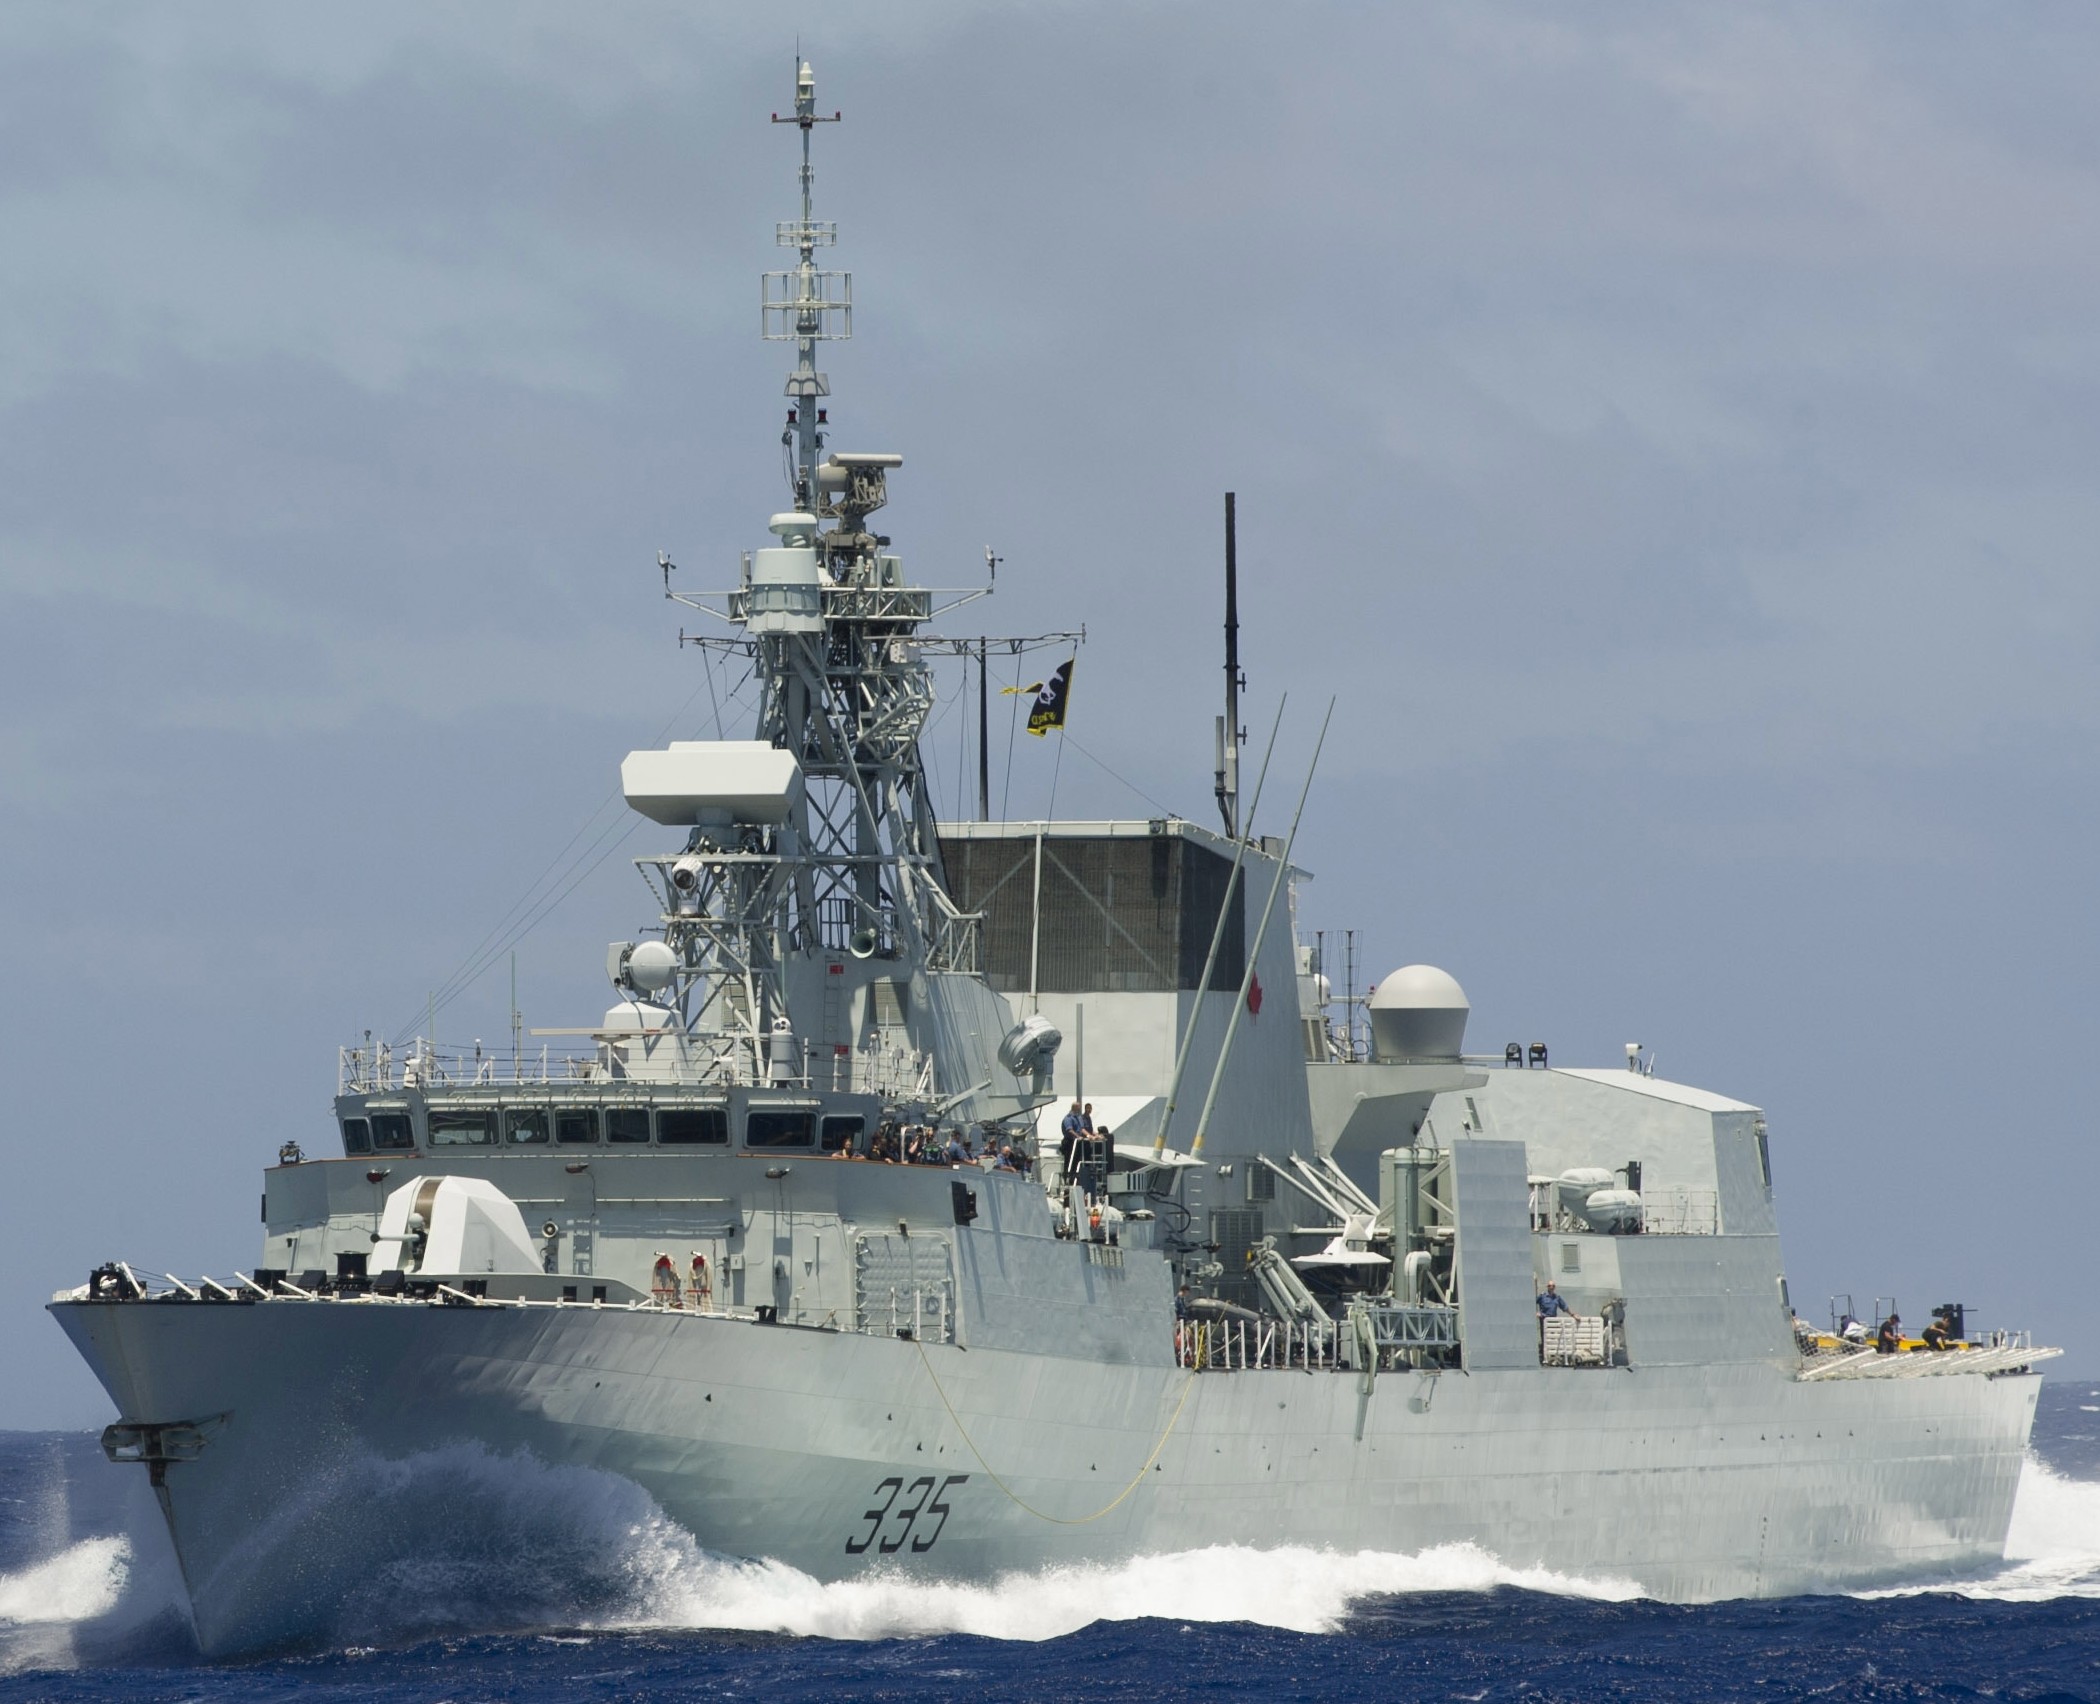 ffh-335 hmcs calgary halifax class helicopter patrol frigate ncsm royal canadian navy 19